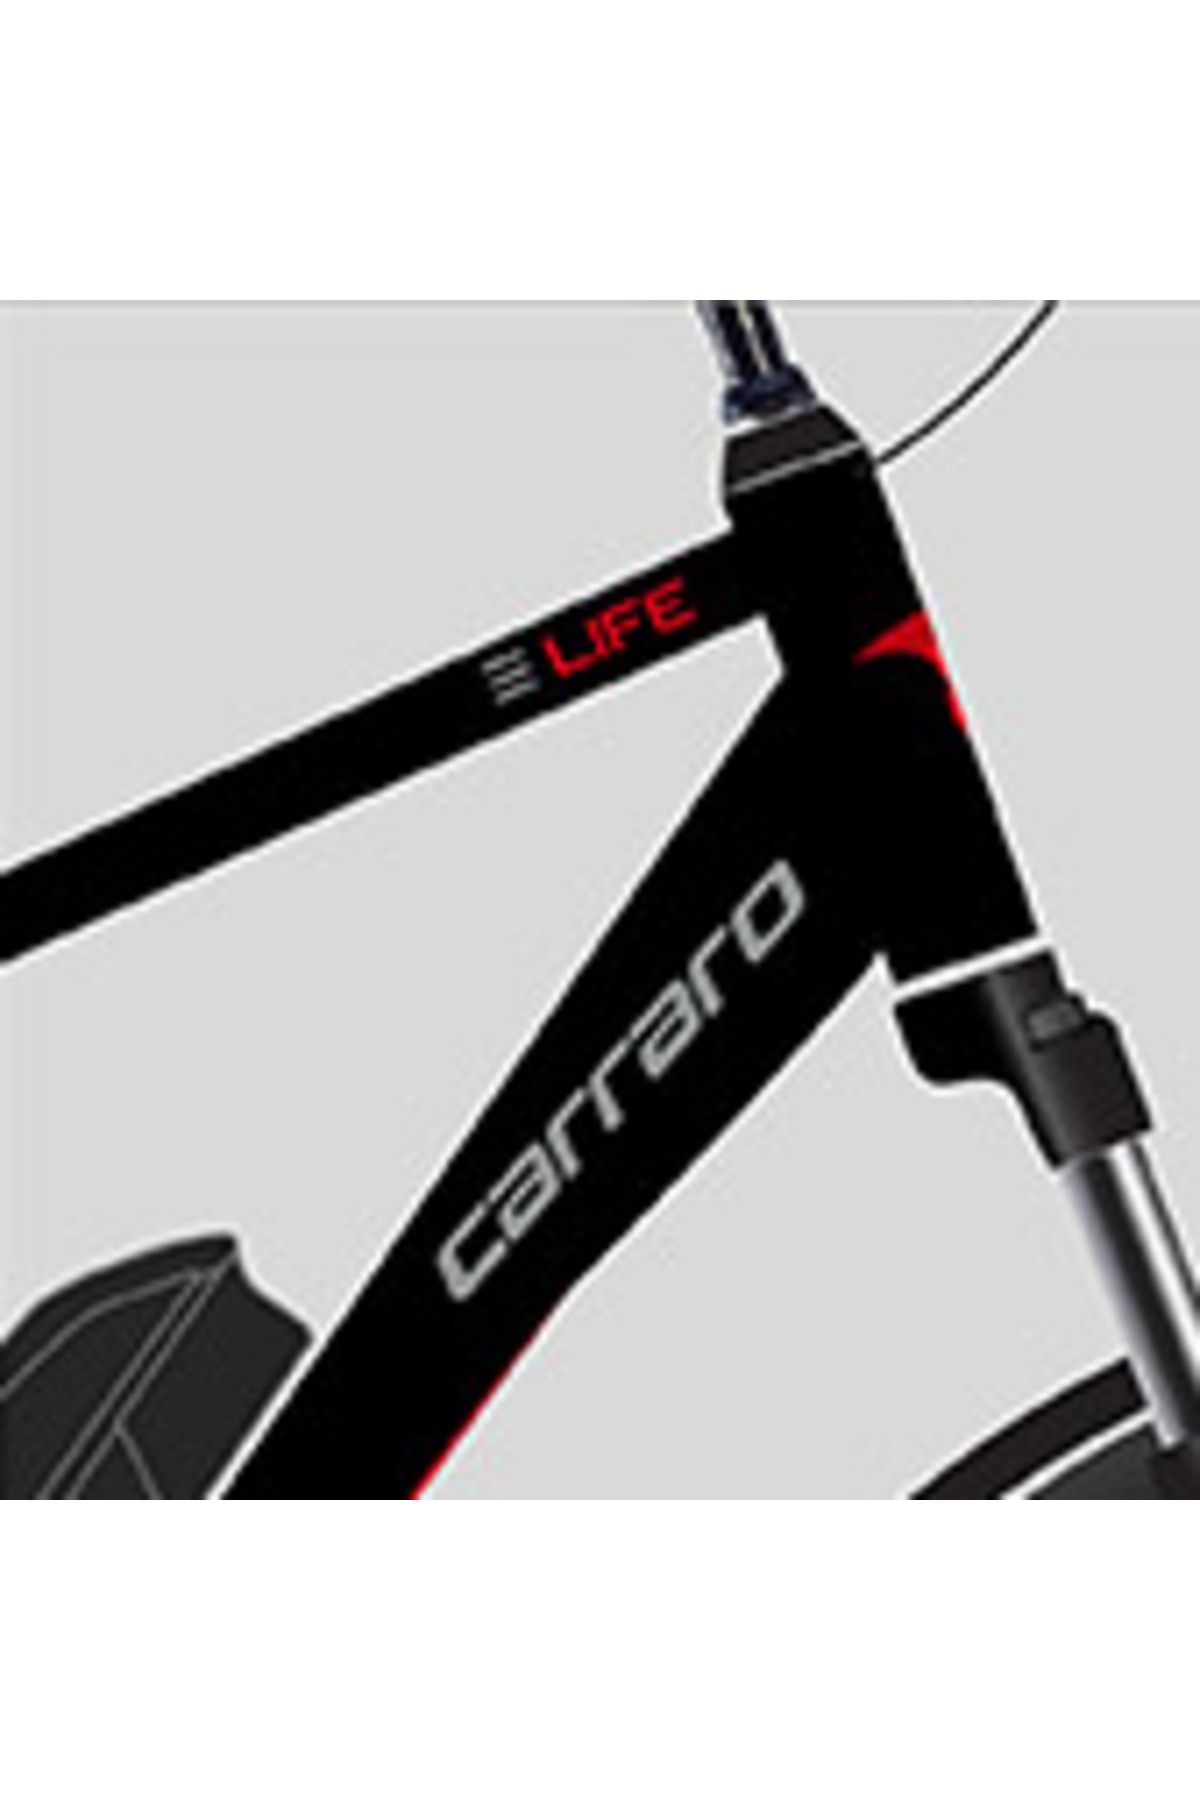 Carraro E line E life Elektrikli bisiklet Siyah kırmızı 47 kadro